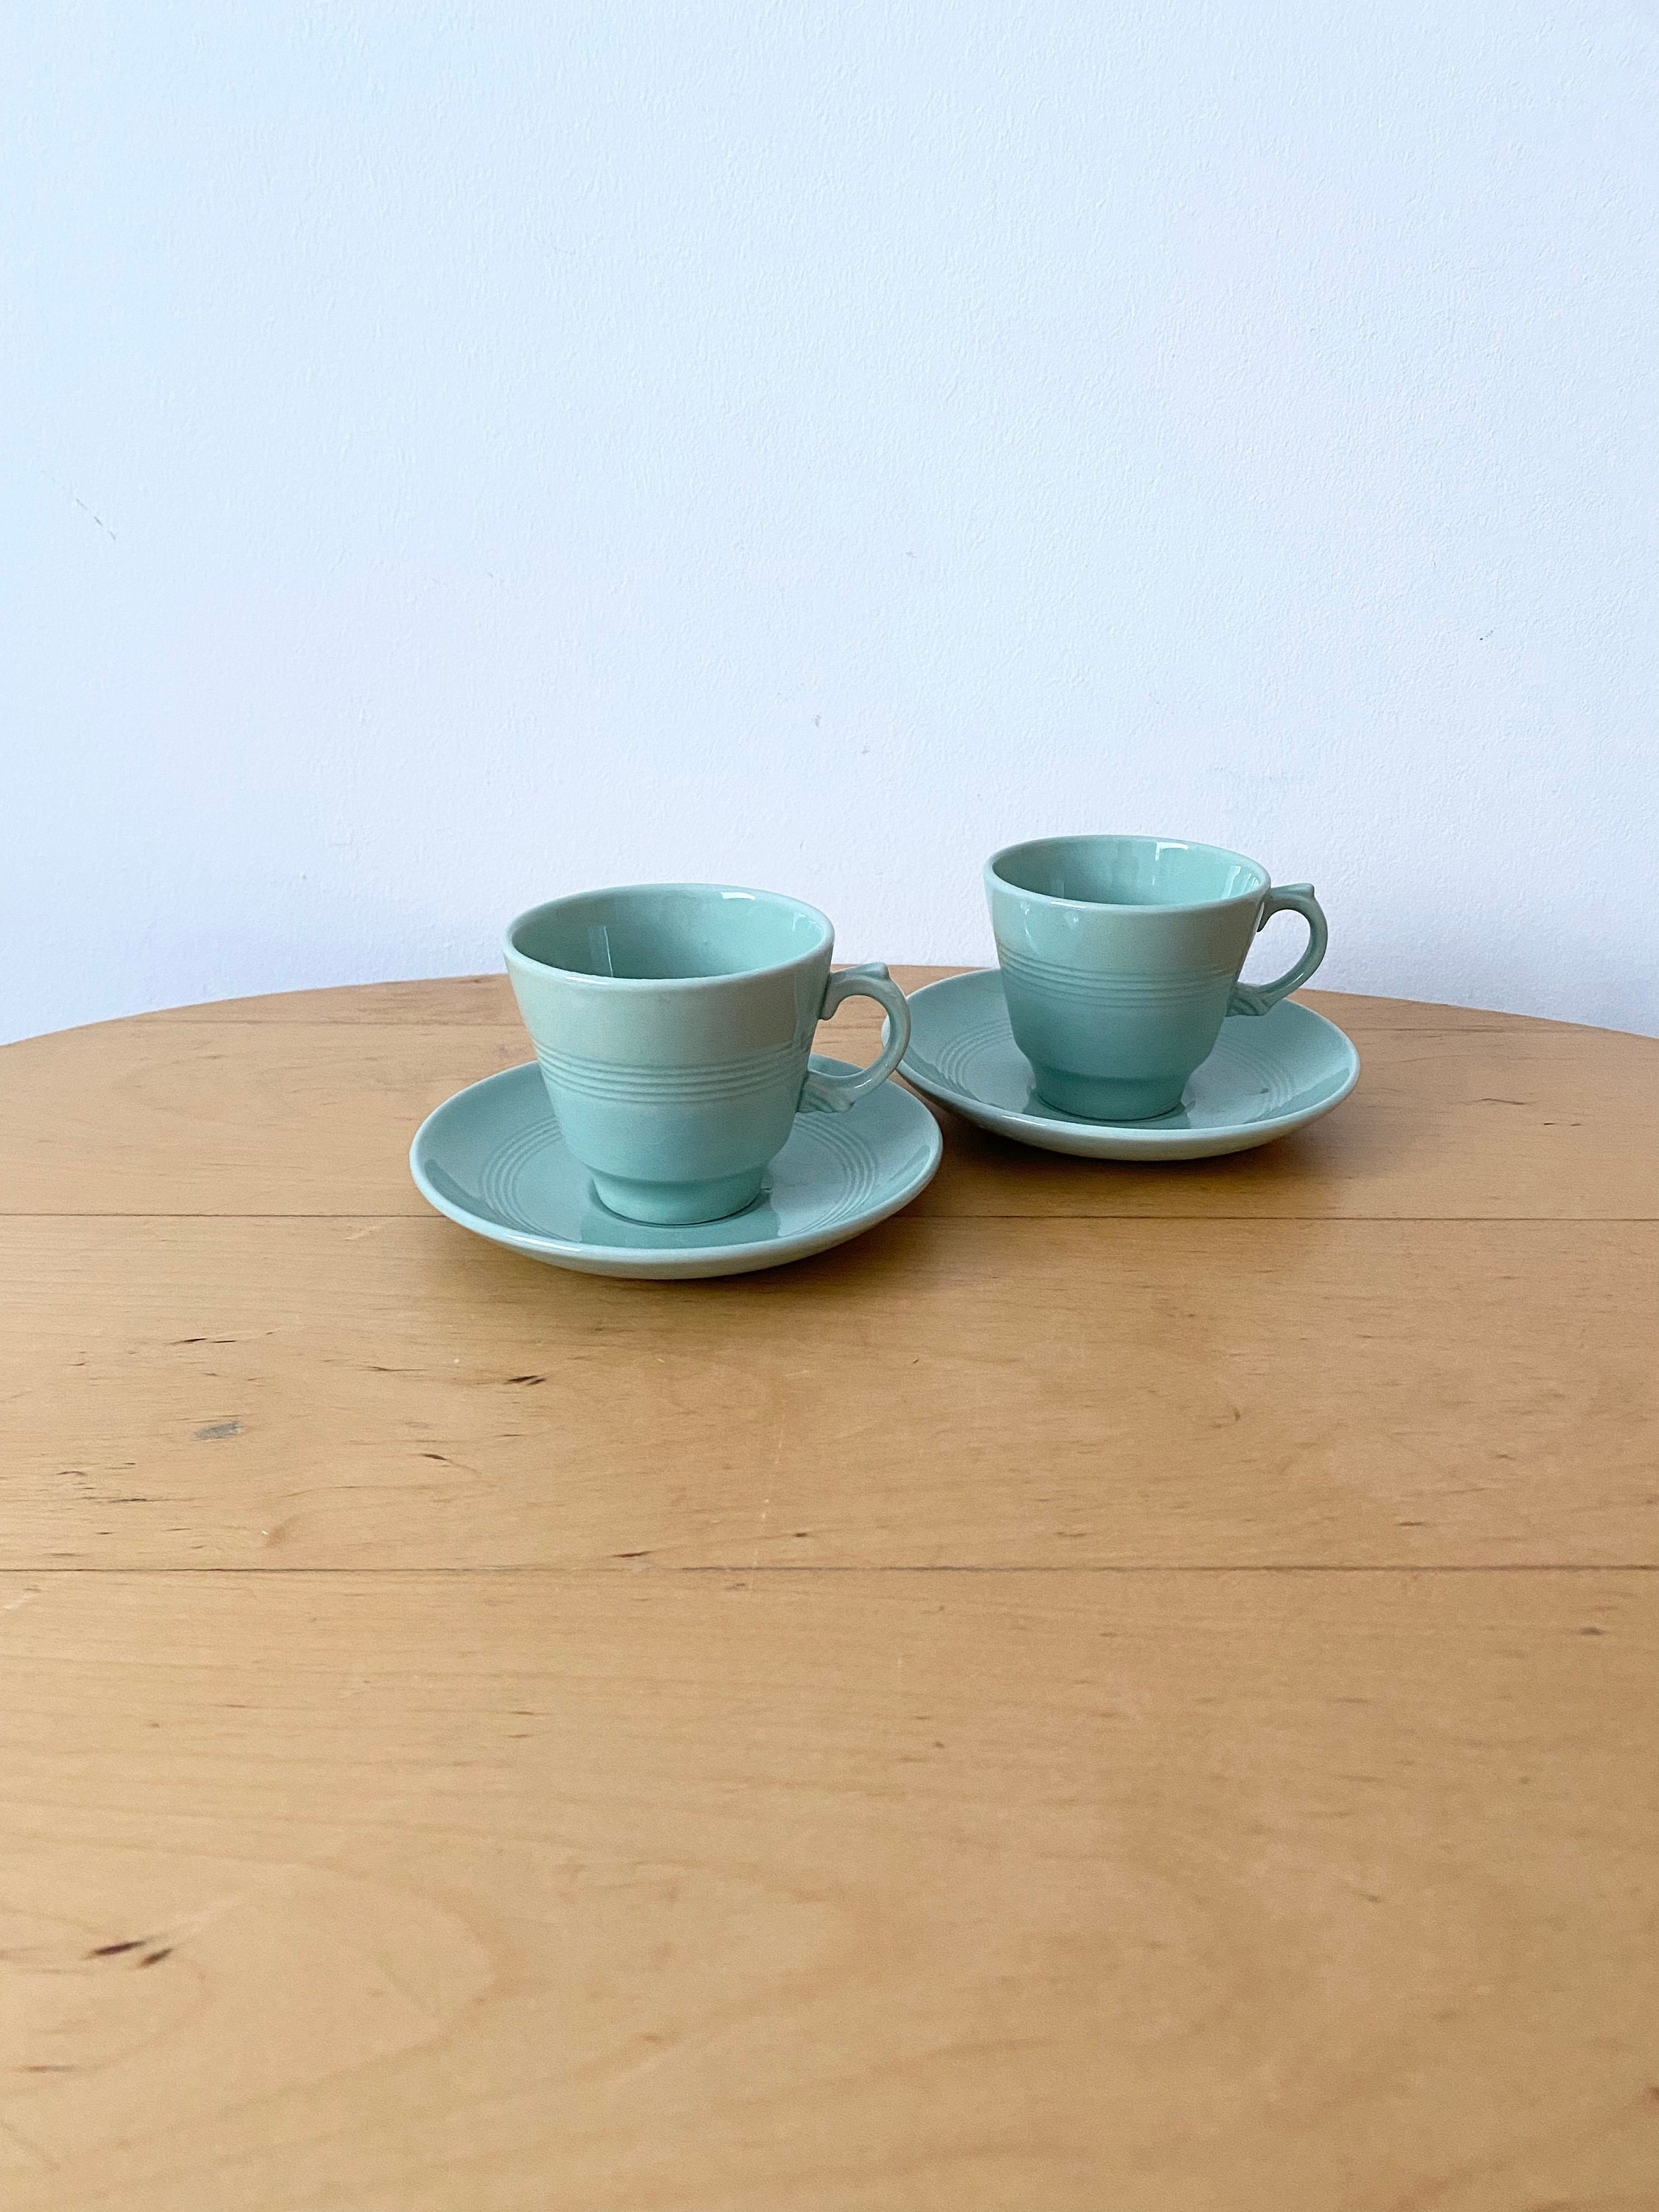 CLASGLAZ 6oz Ceramic Espresso Cup and Saucer Porcelain Latte Cup Wooden  Handle Cappuccino Cup Demitasse Cup (Black)